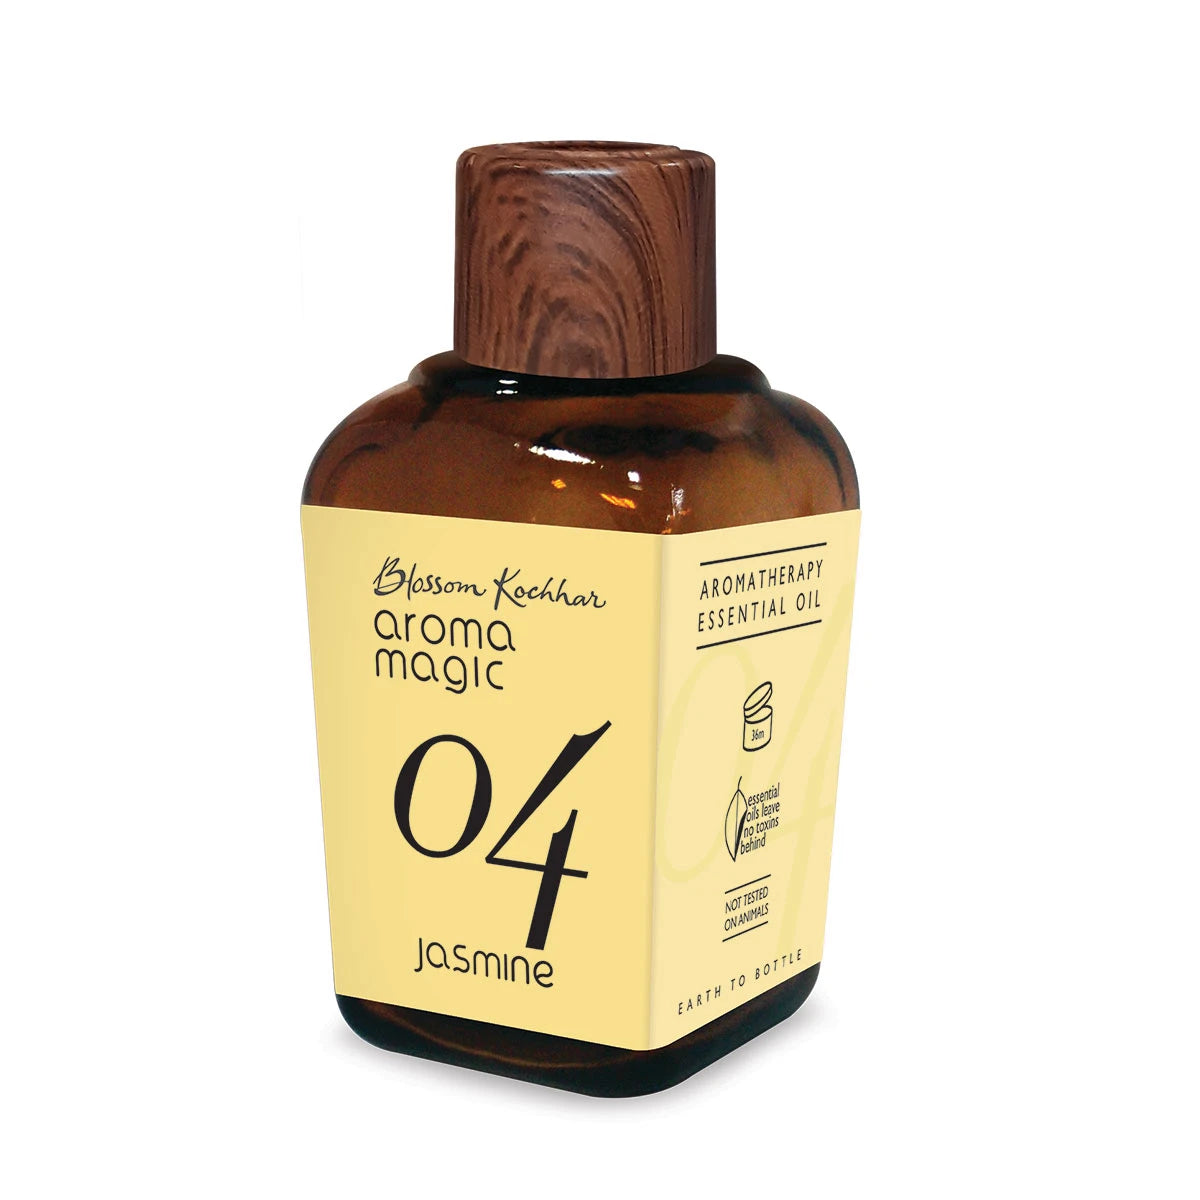 Aroma magic Jasmine oil